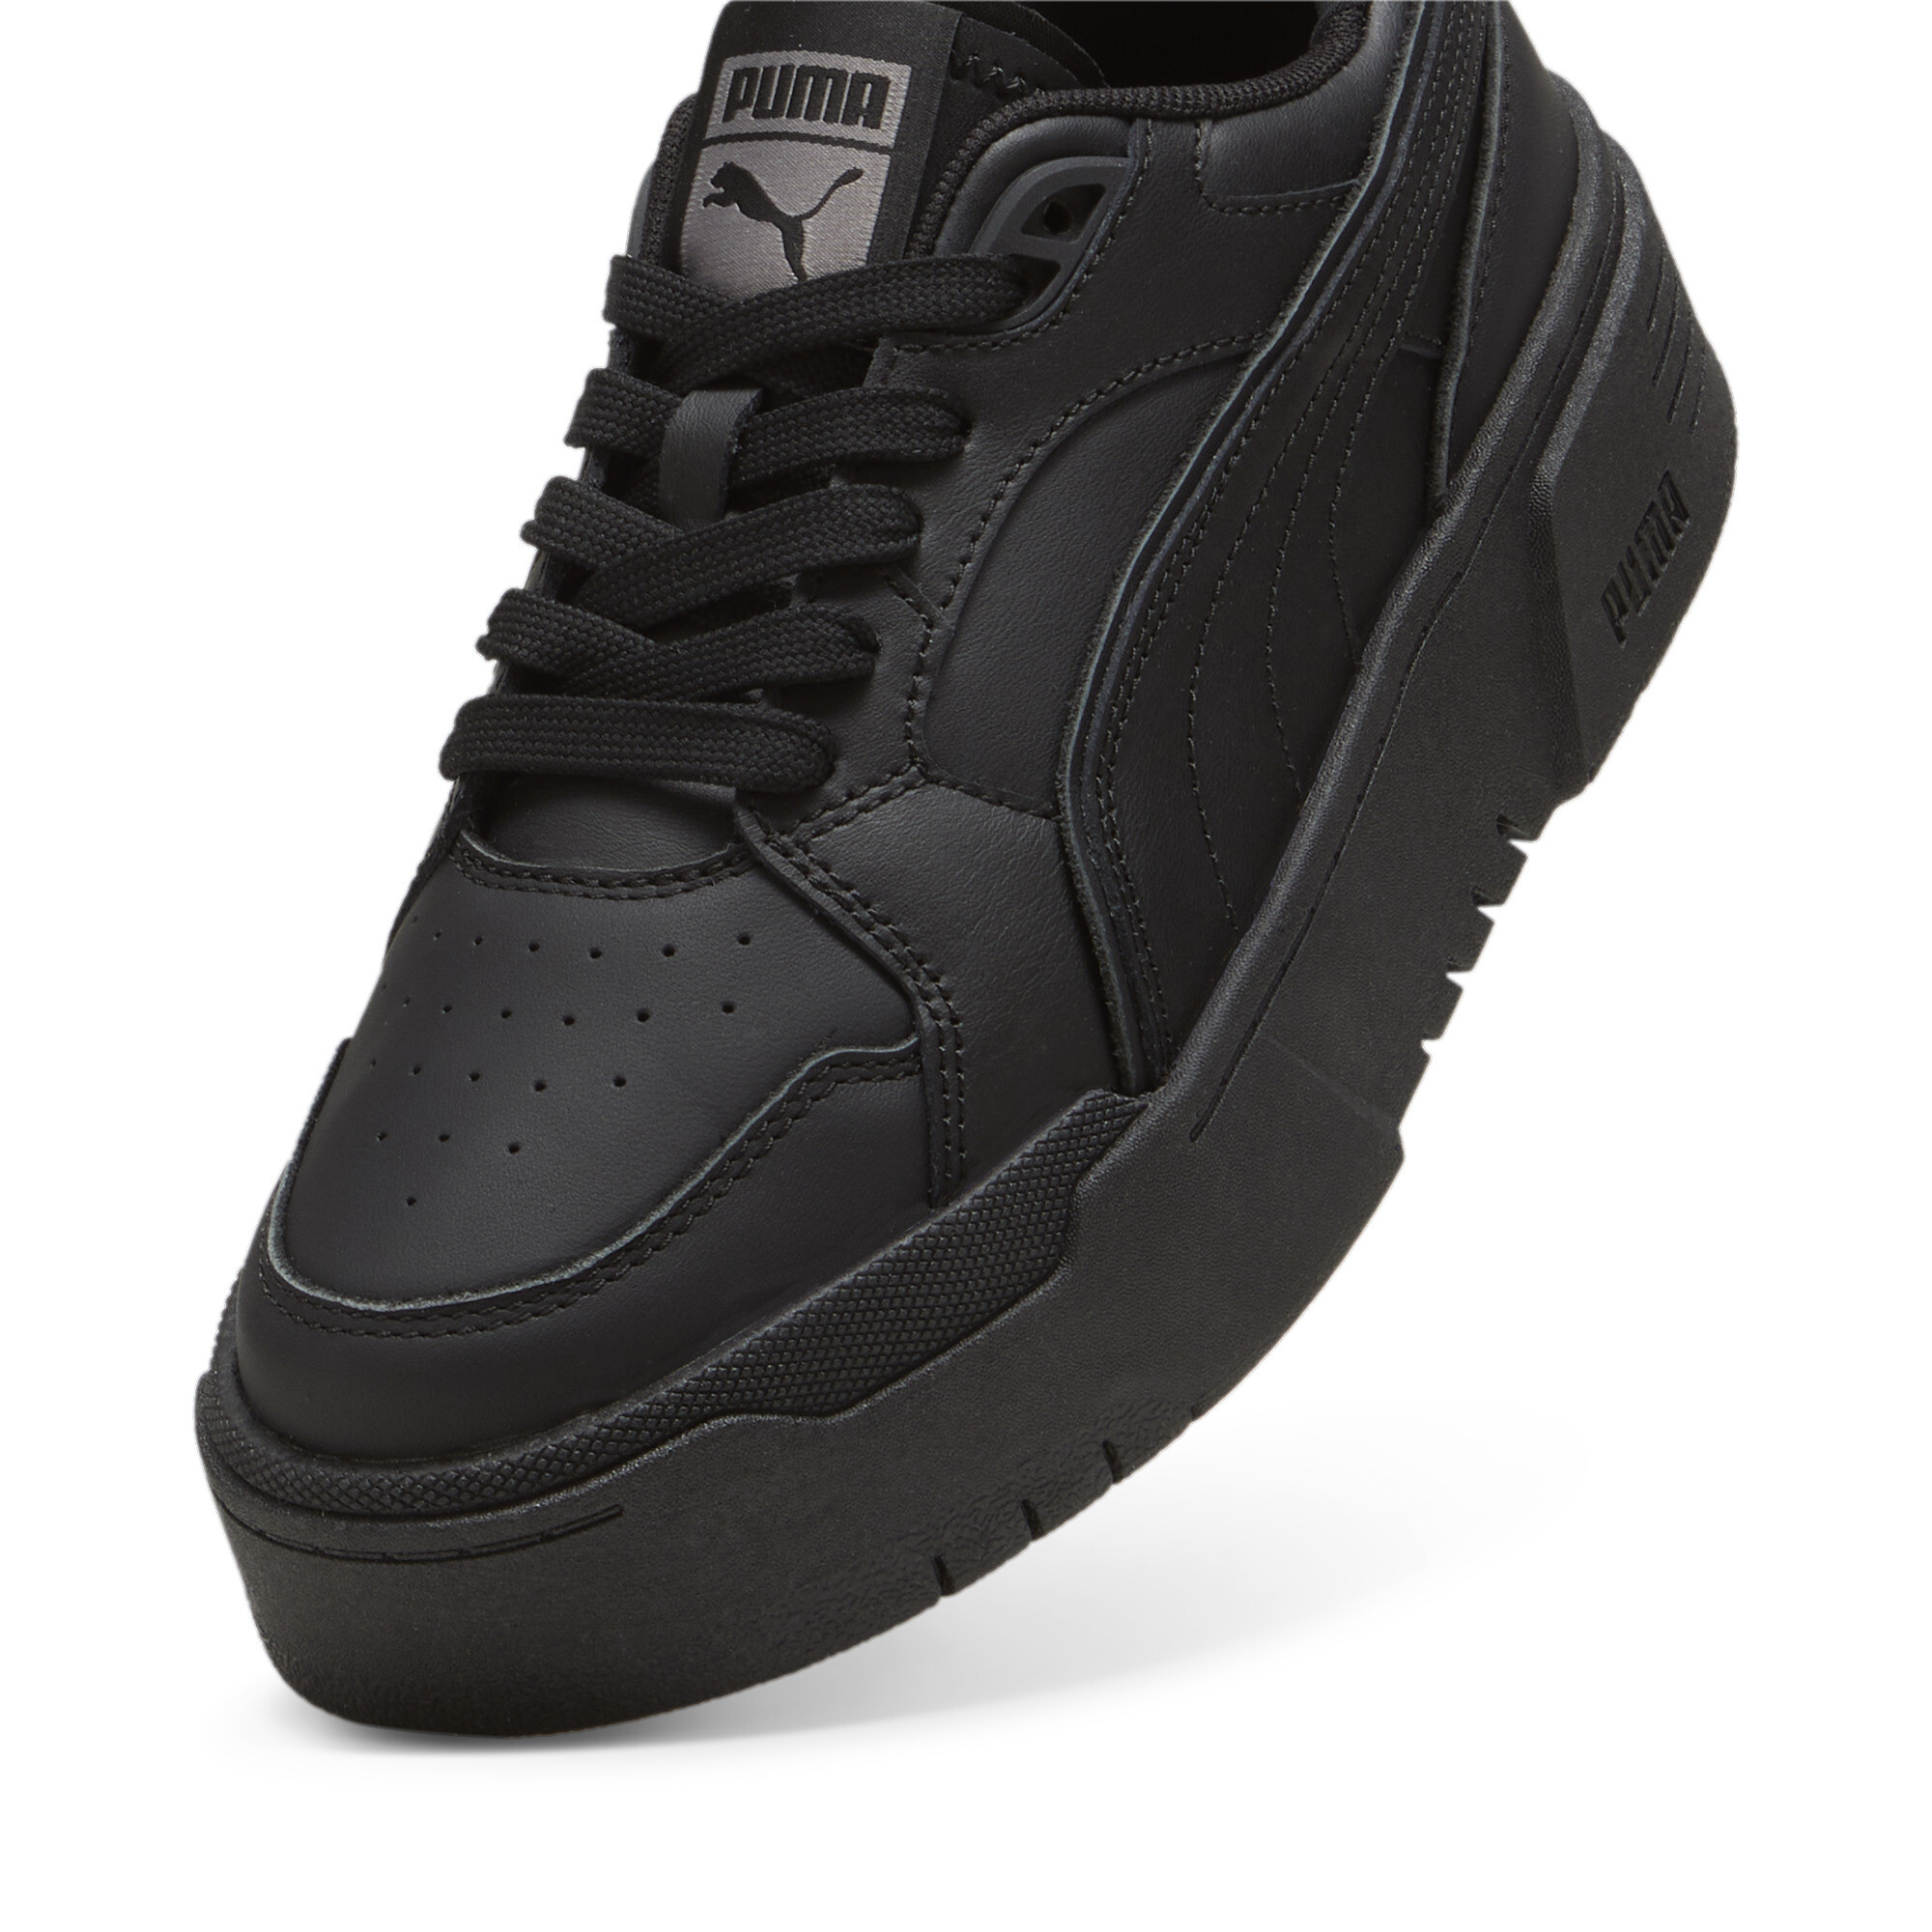 Women's Puma CA. Flyz's Sneakers, Black, Size 38, Shoes